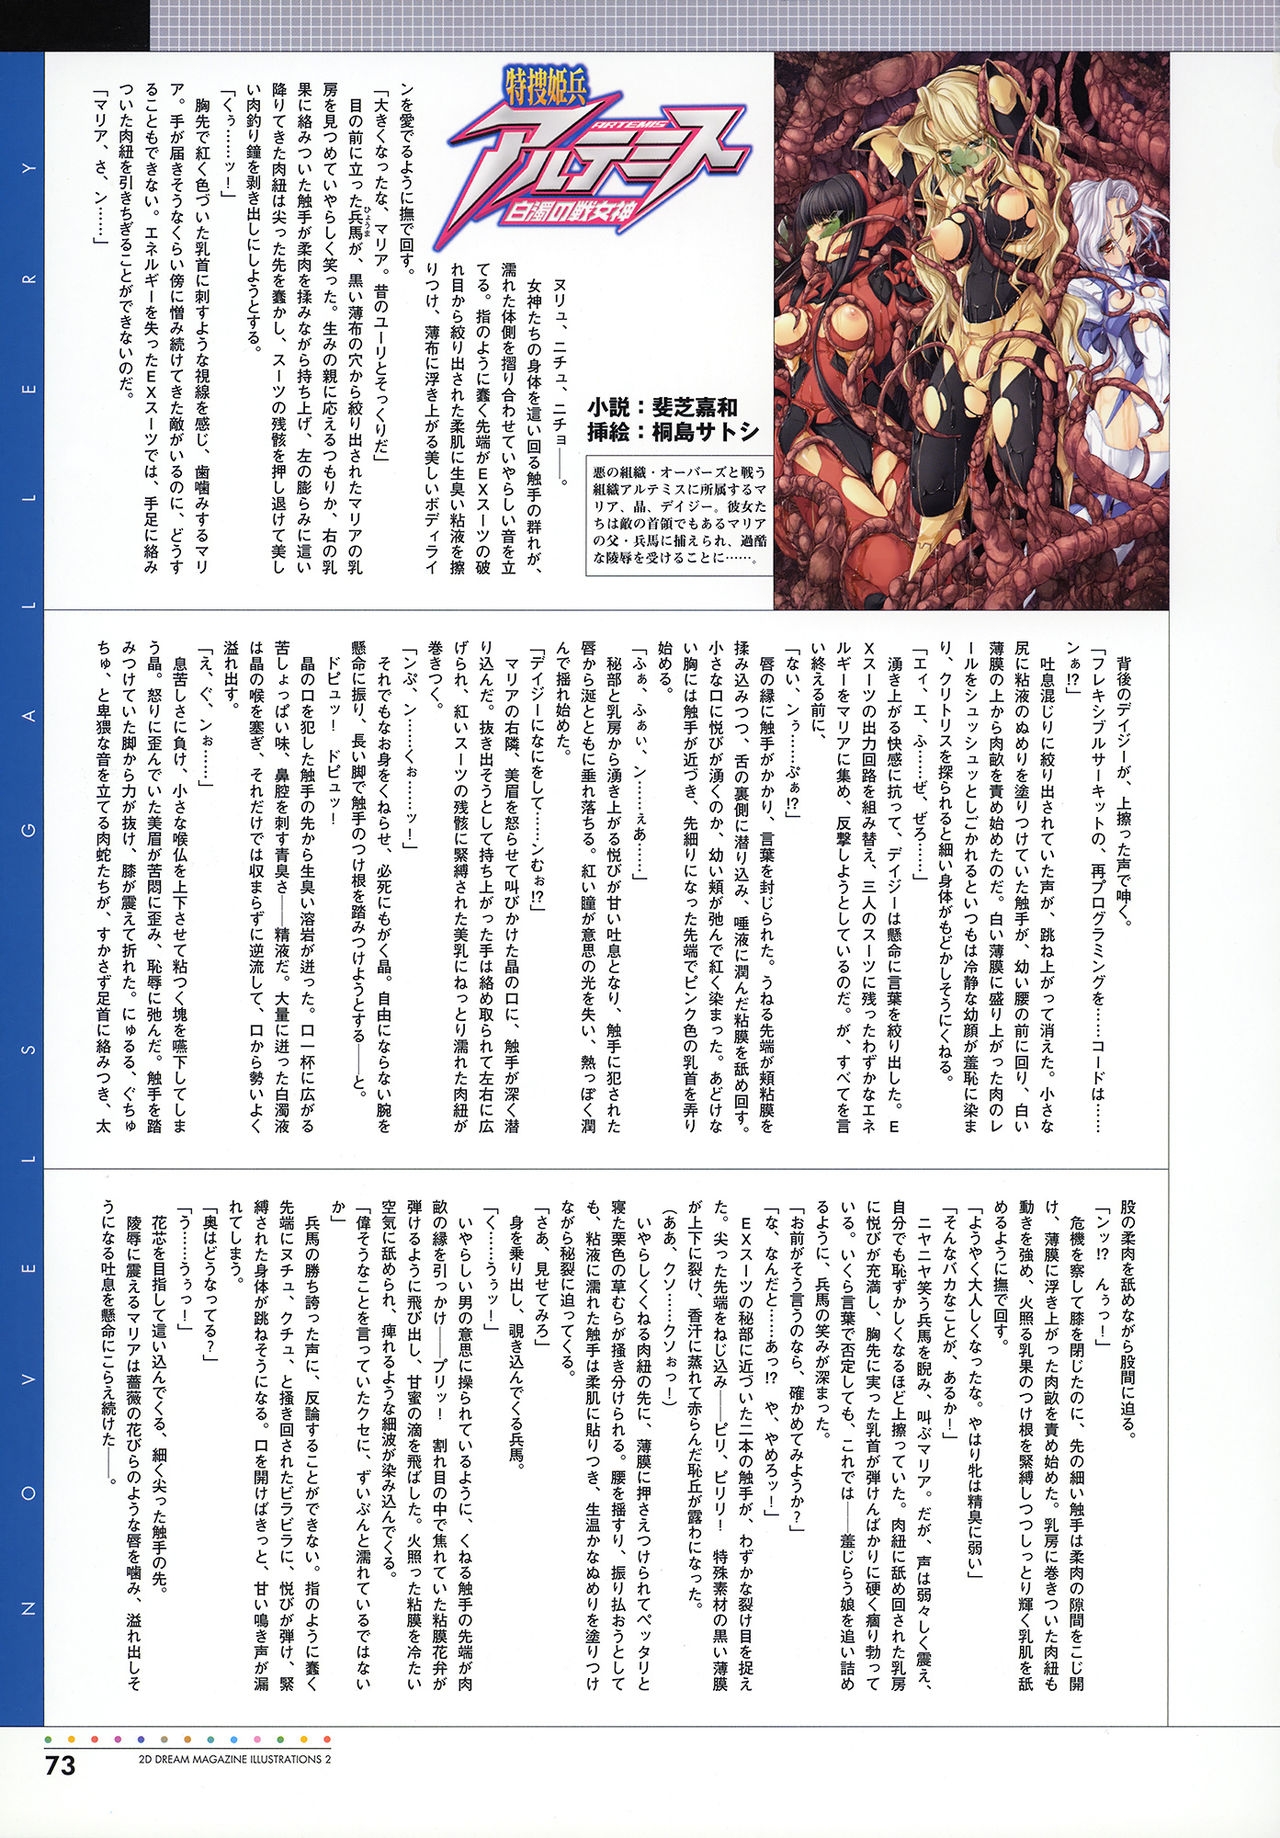 [Illustrations] Nijigen Dream Magazine Illustrations #2 74